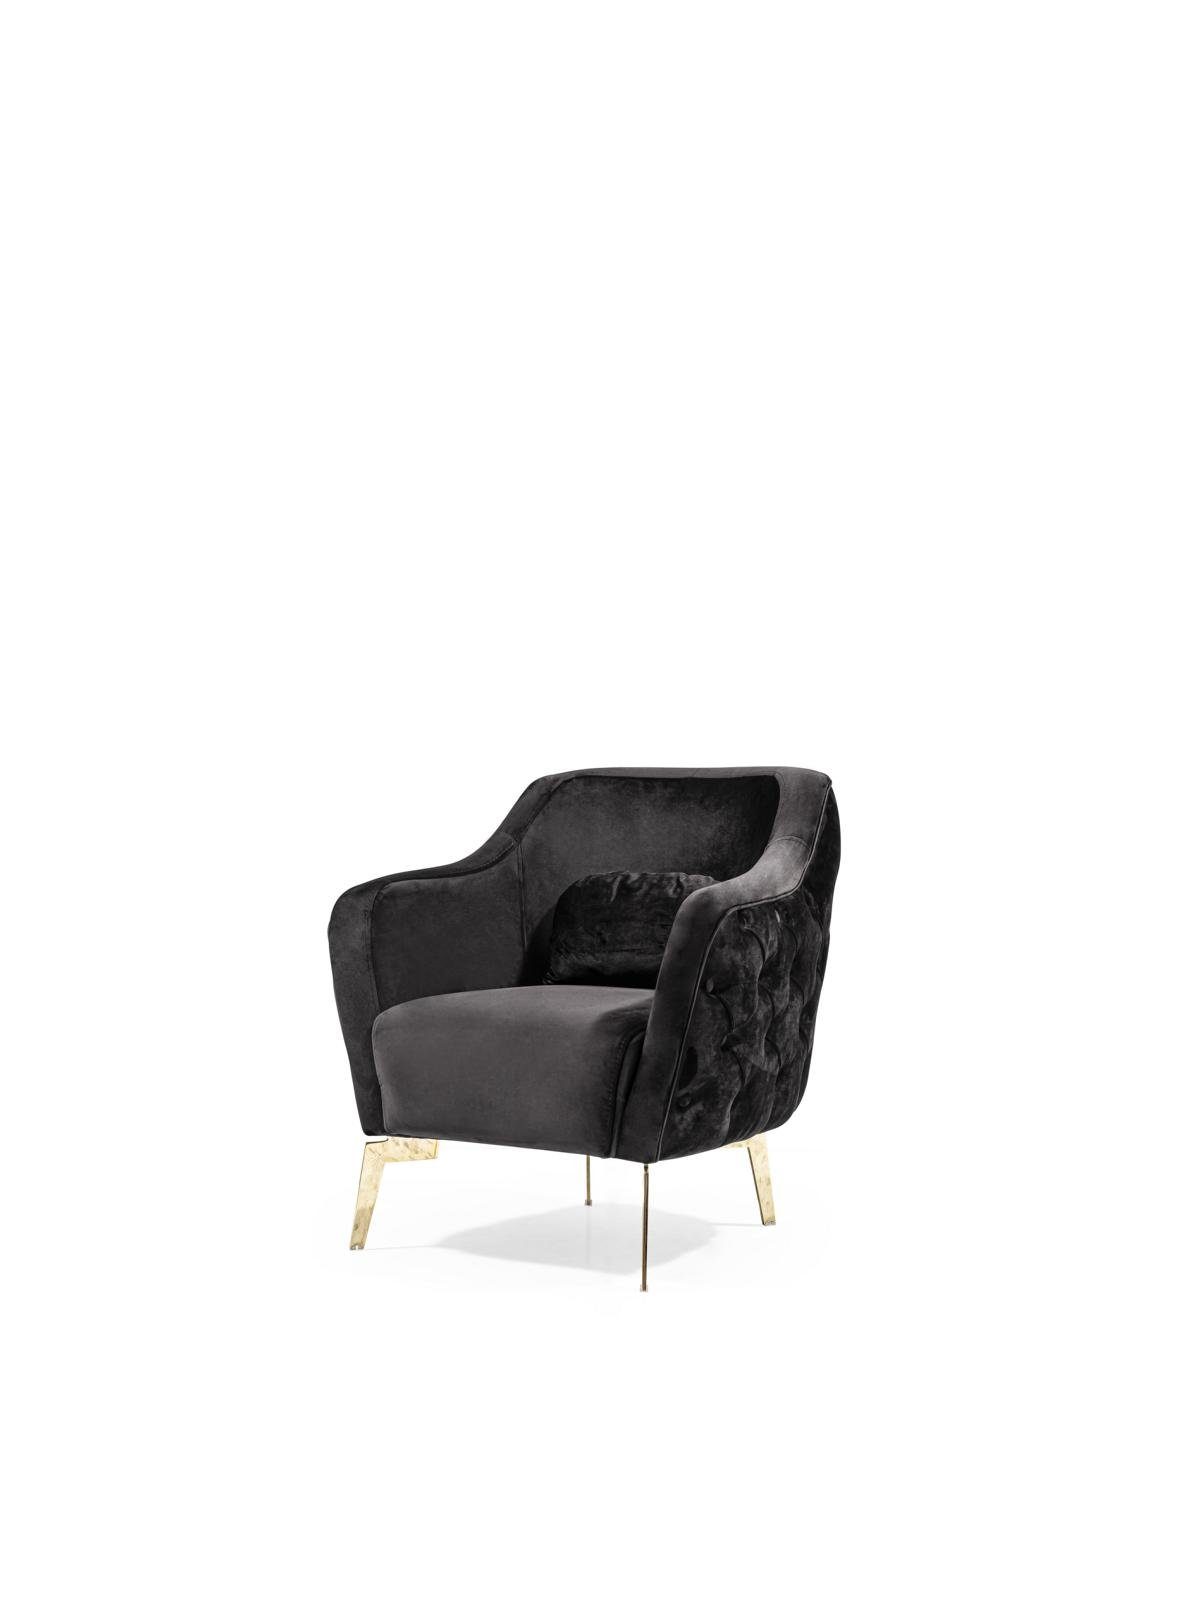 JVmoebel Farbe, Sofa Möbel neu Sessel weiße Sofa Sitzer Luxus Design Teile Sofagarnitur 31 2